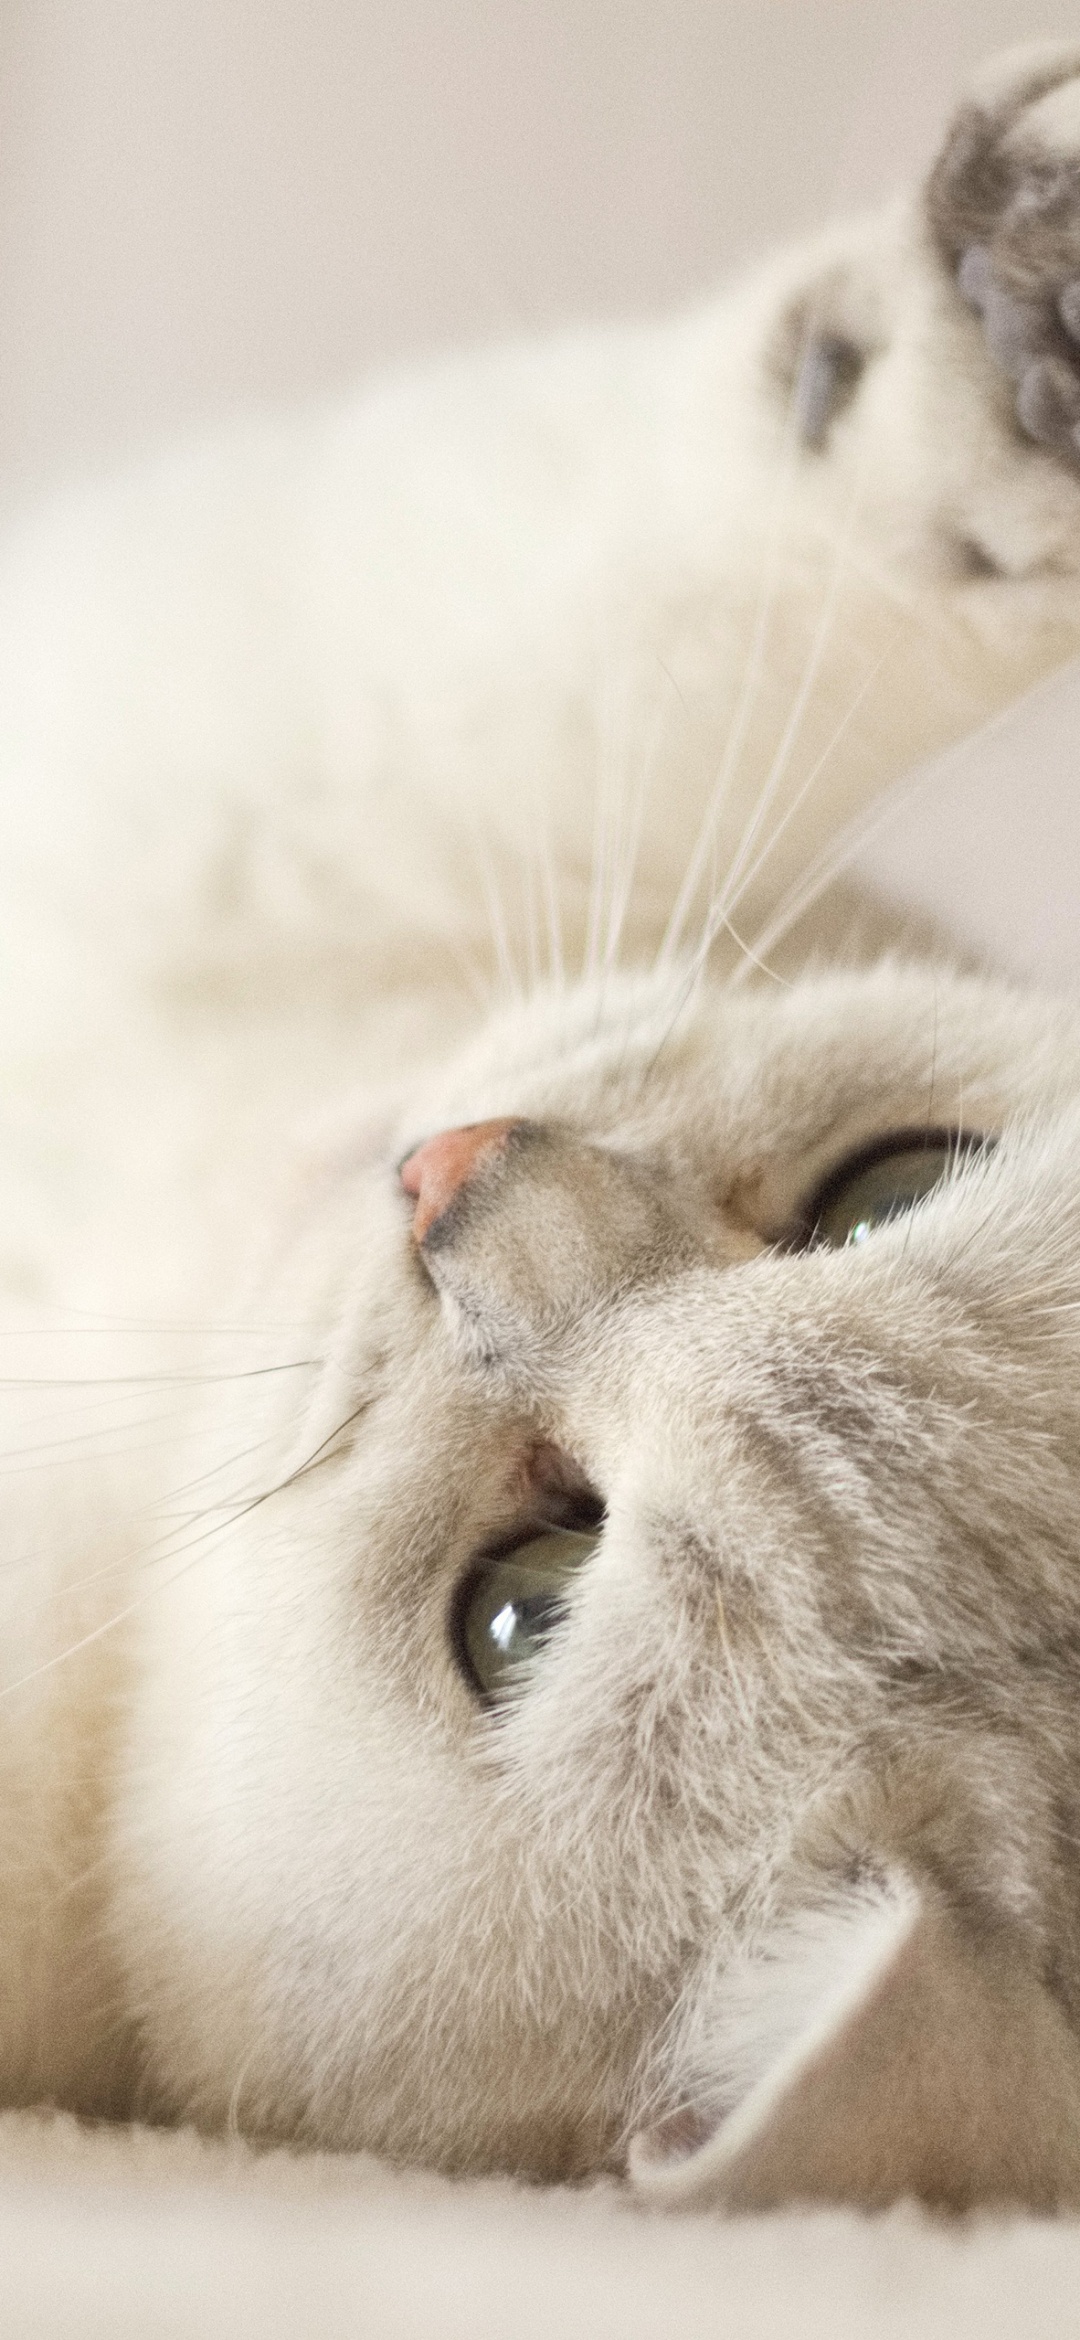 Cute Cat Wallpapers For Desktop 66 images